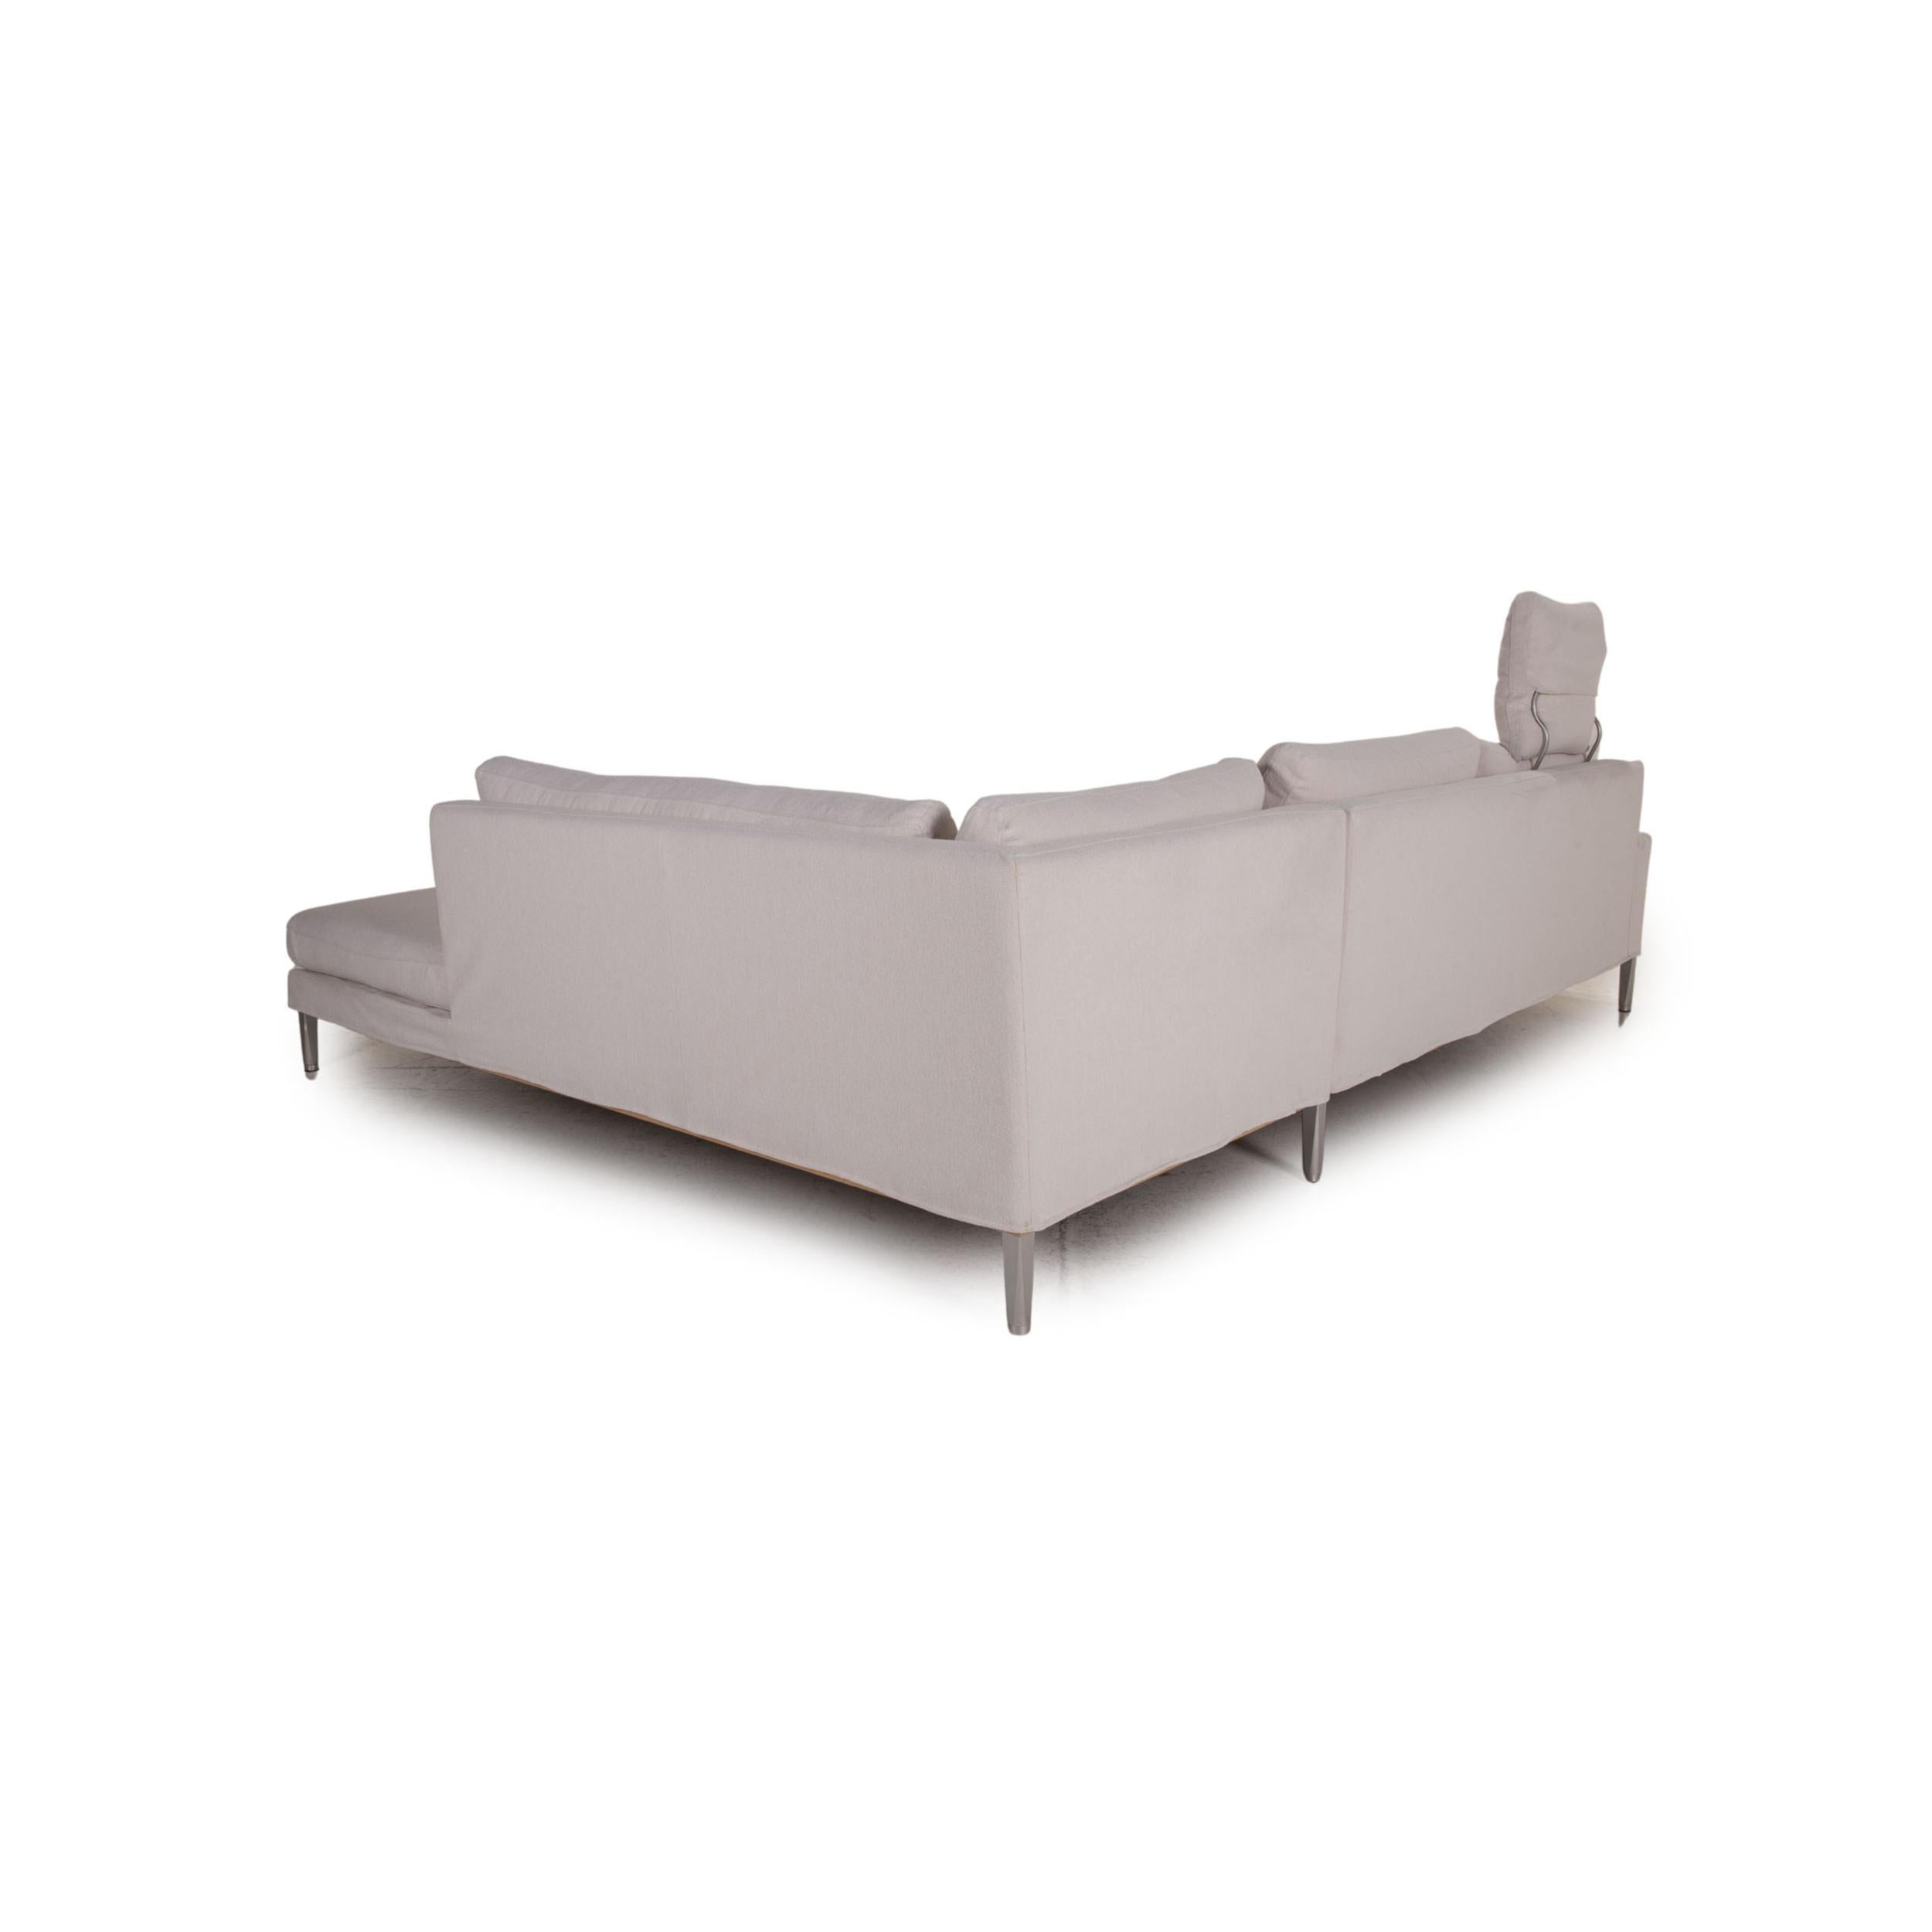 Leather FSM Clarus Fabric Sofa Cream Corner Sofa Couch For Sale